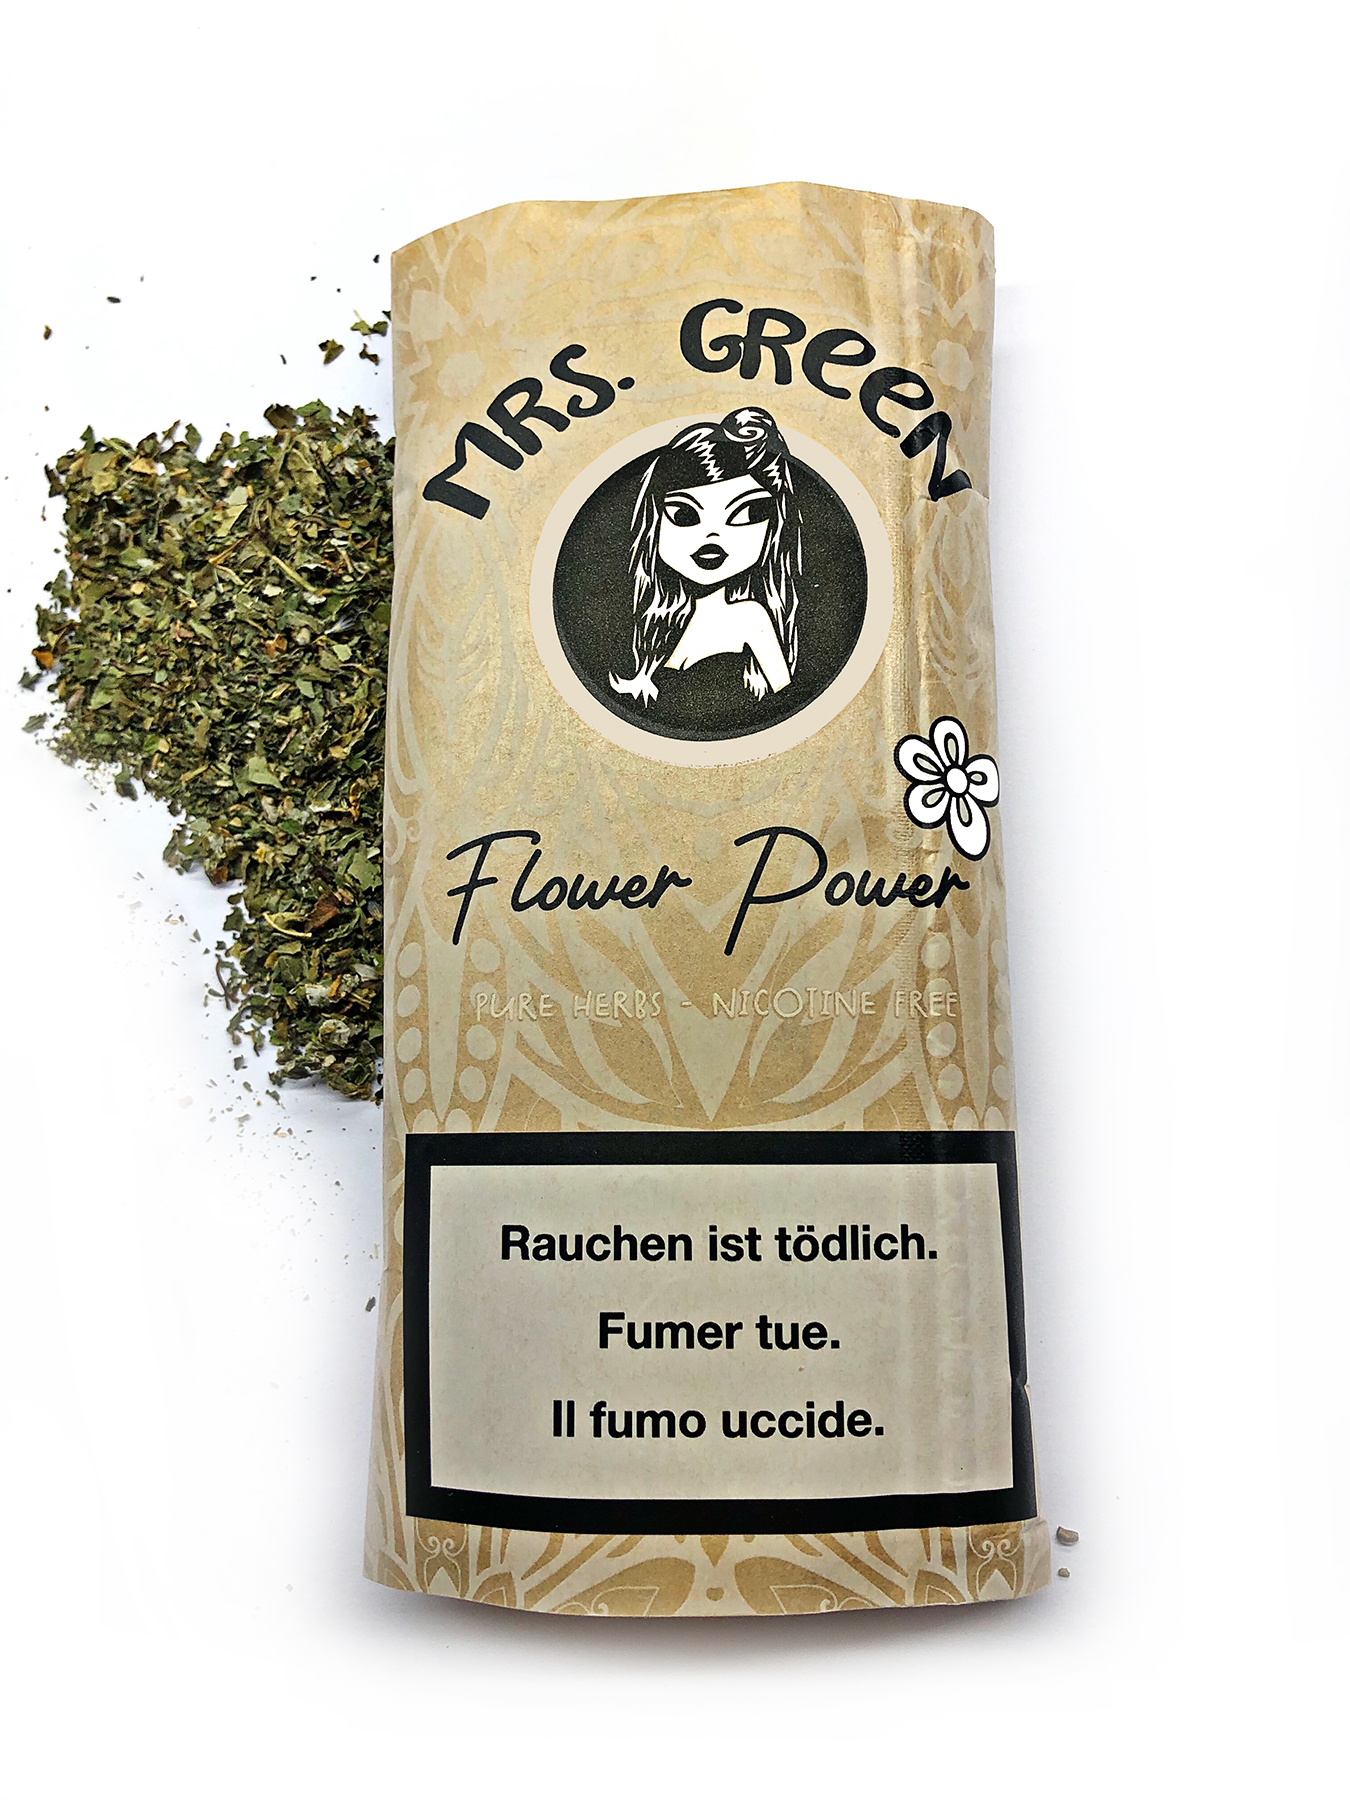 Frau Grün - Mezcla de hierbas Flower Power 80g (100% natural y sin nicotina)